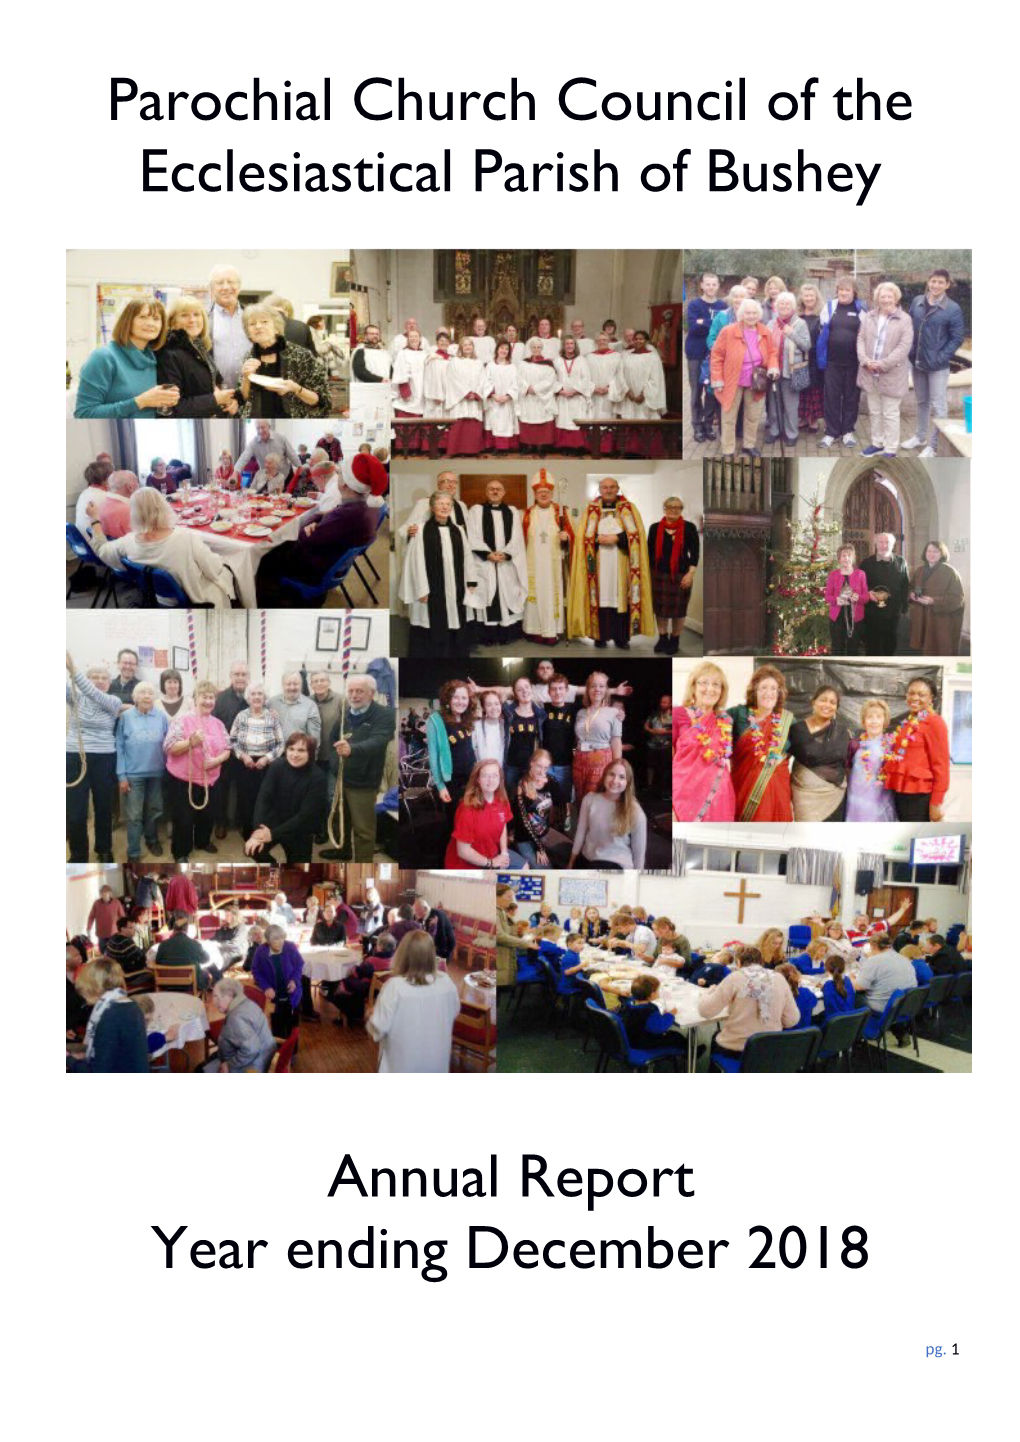 Parochial Church Council of the Ecclesiastical Parish of Bushey Annual Report Year Ending December 2018